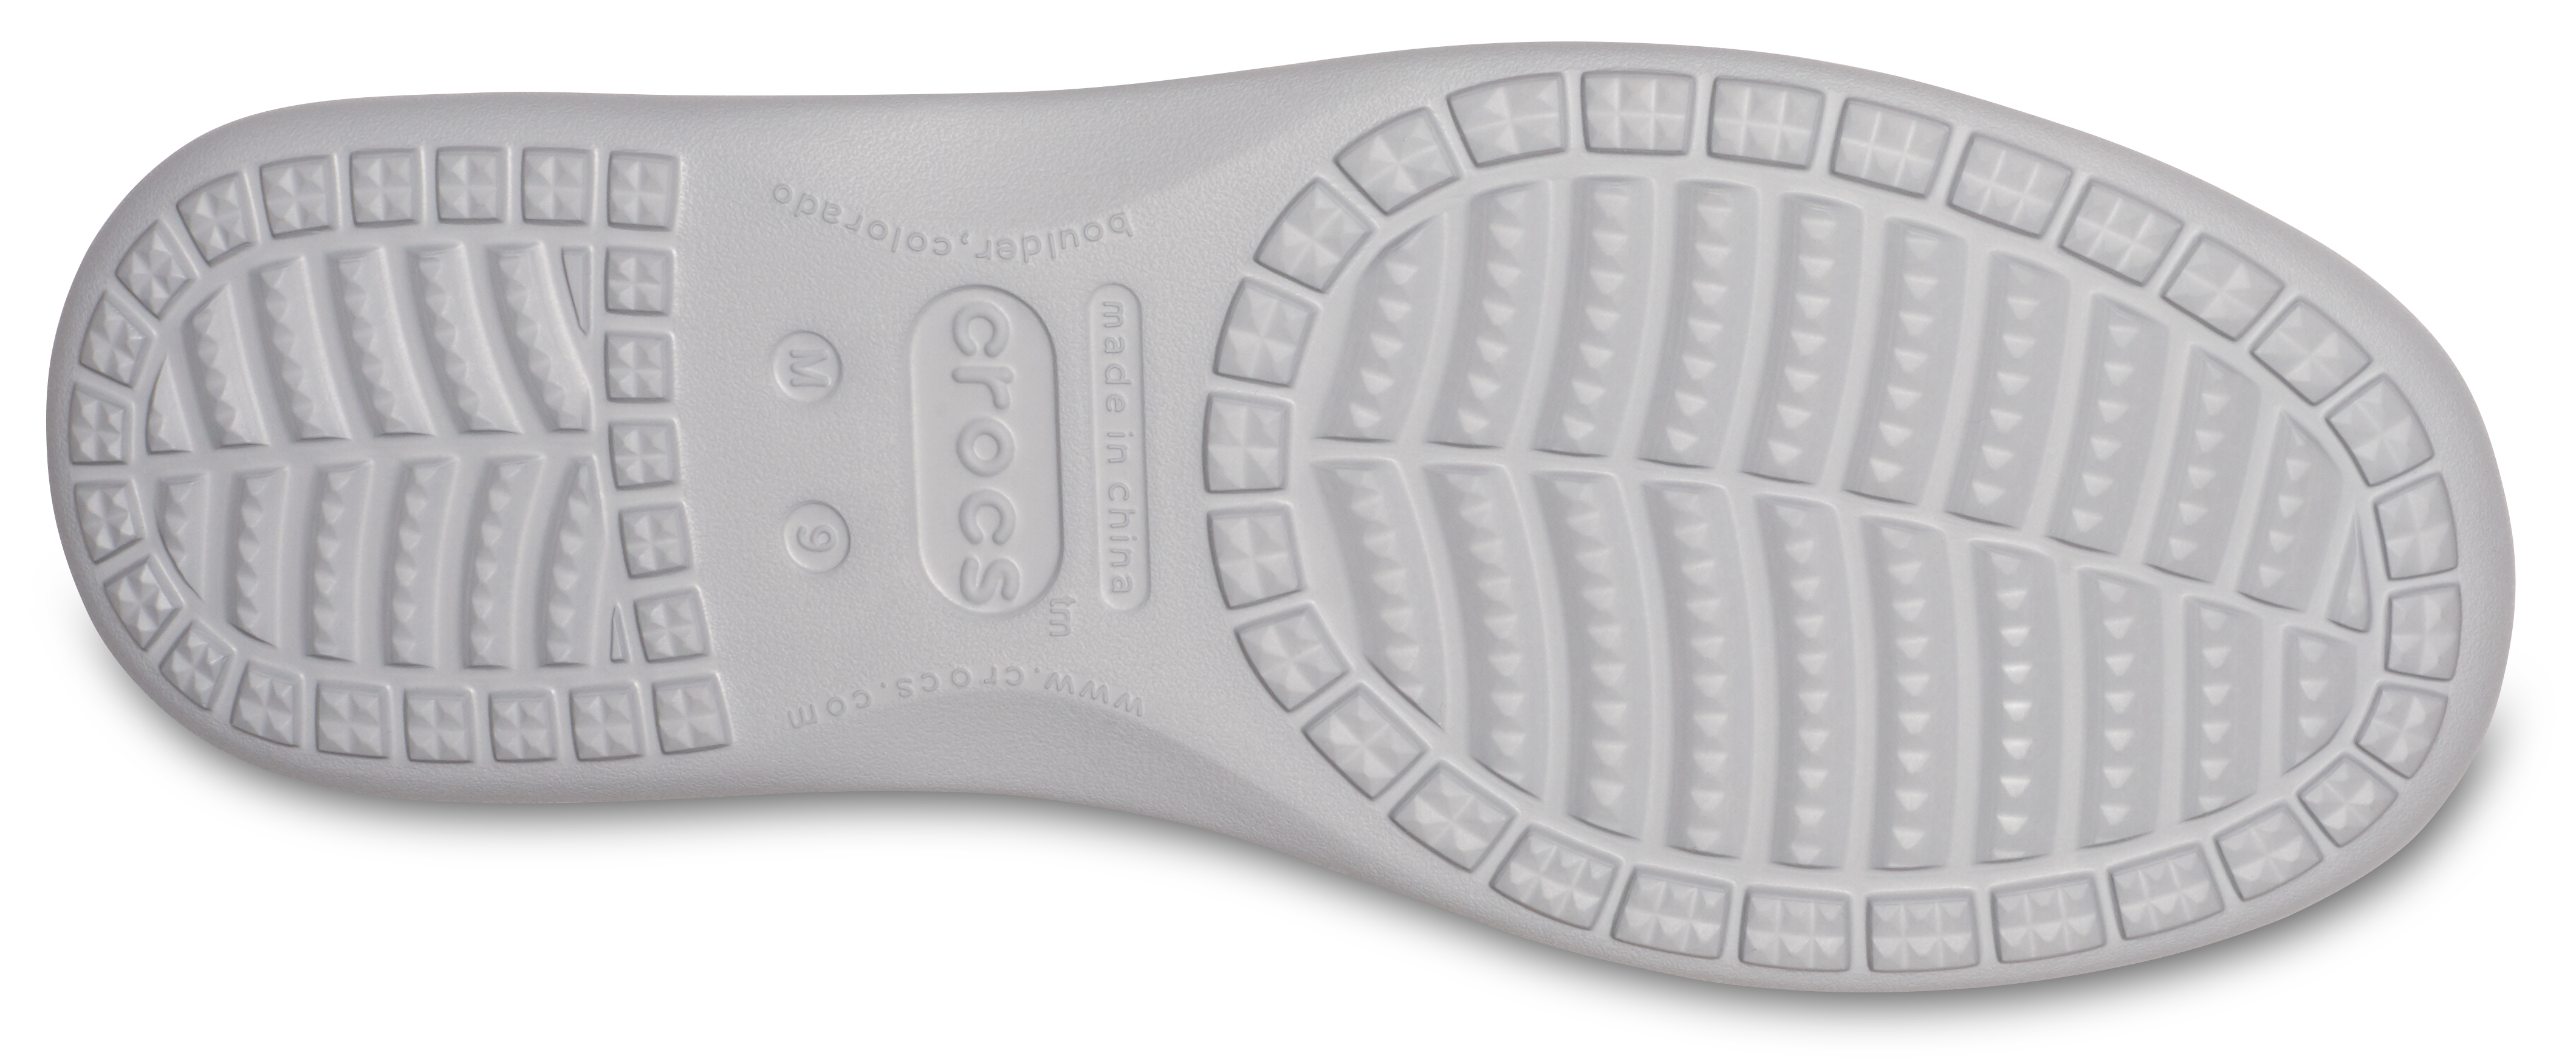 Crocs Men's Santa Cruz Slip on Loafers - image 2 of 6